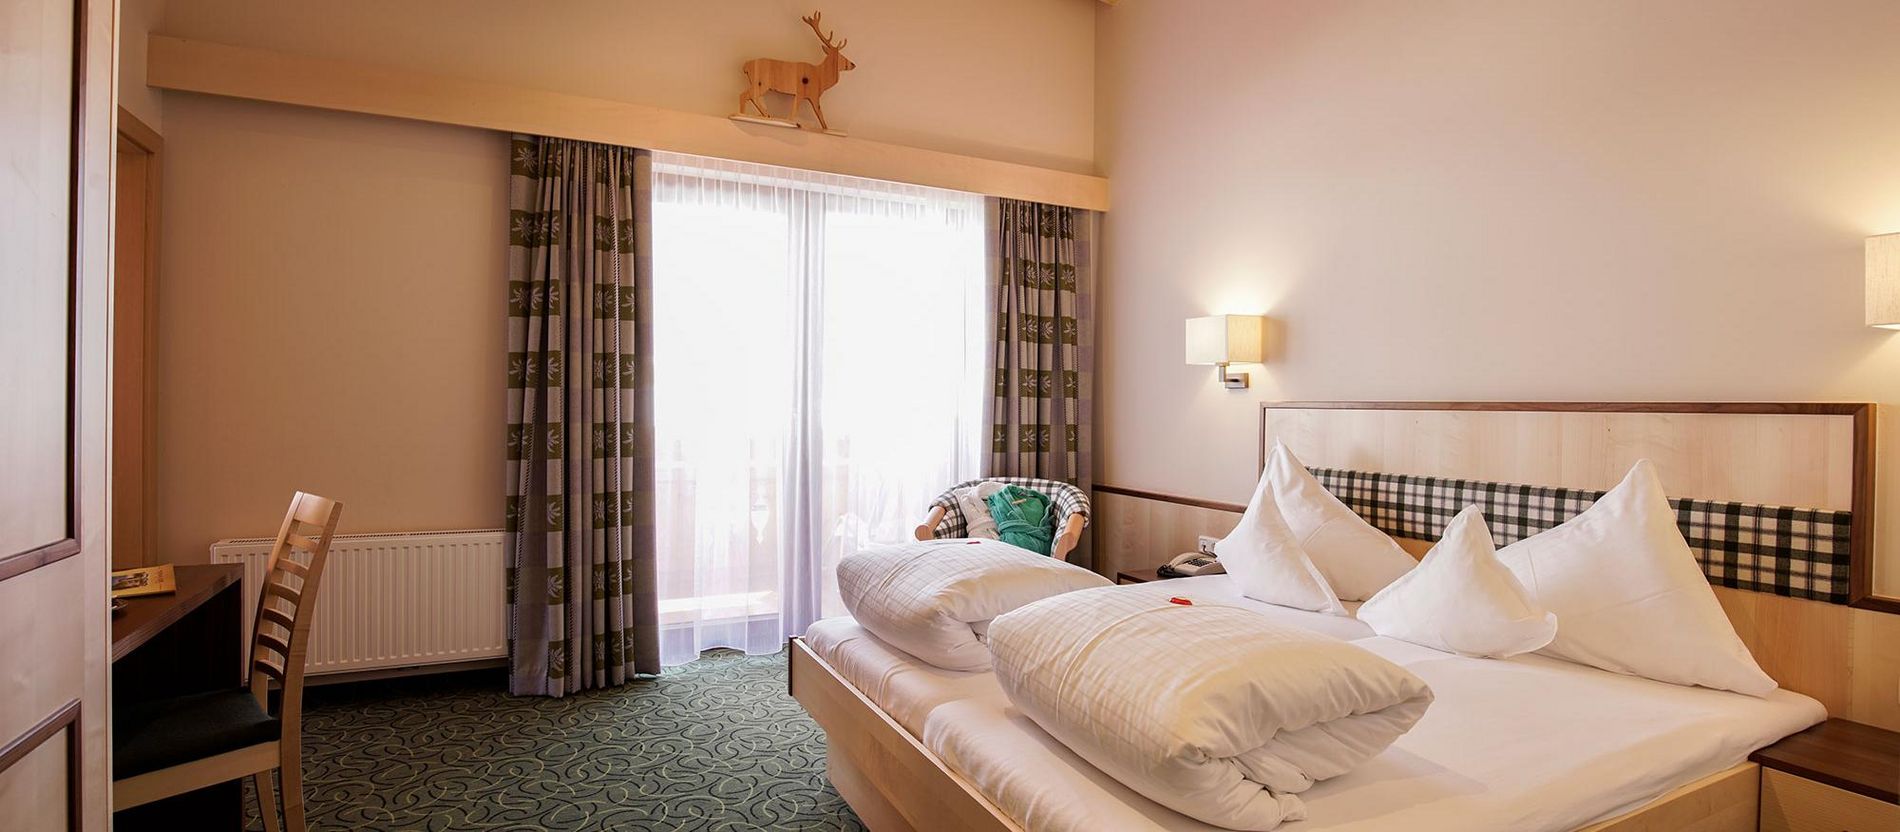 Hotel Ötztal - Blick ins Zimmer - Rechts steht ein Bett